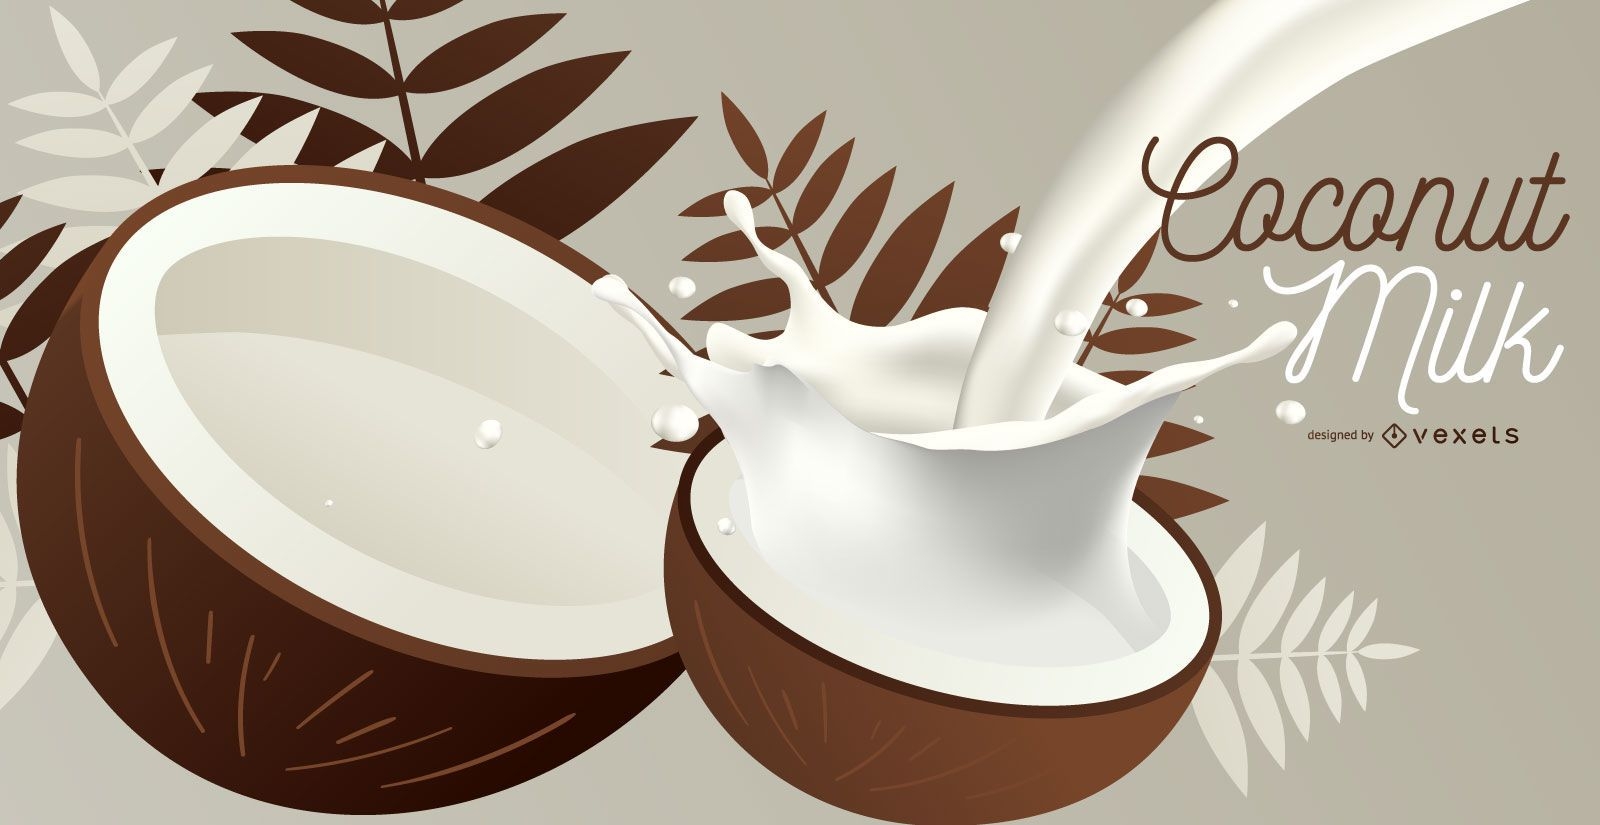 Coconut milk illustration